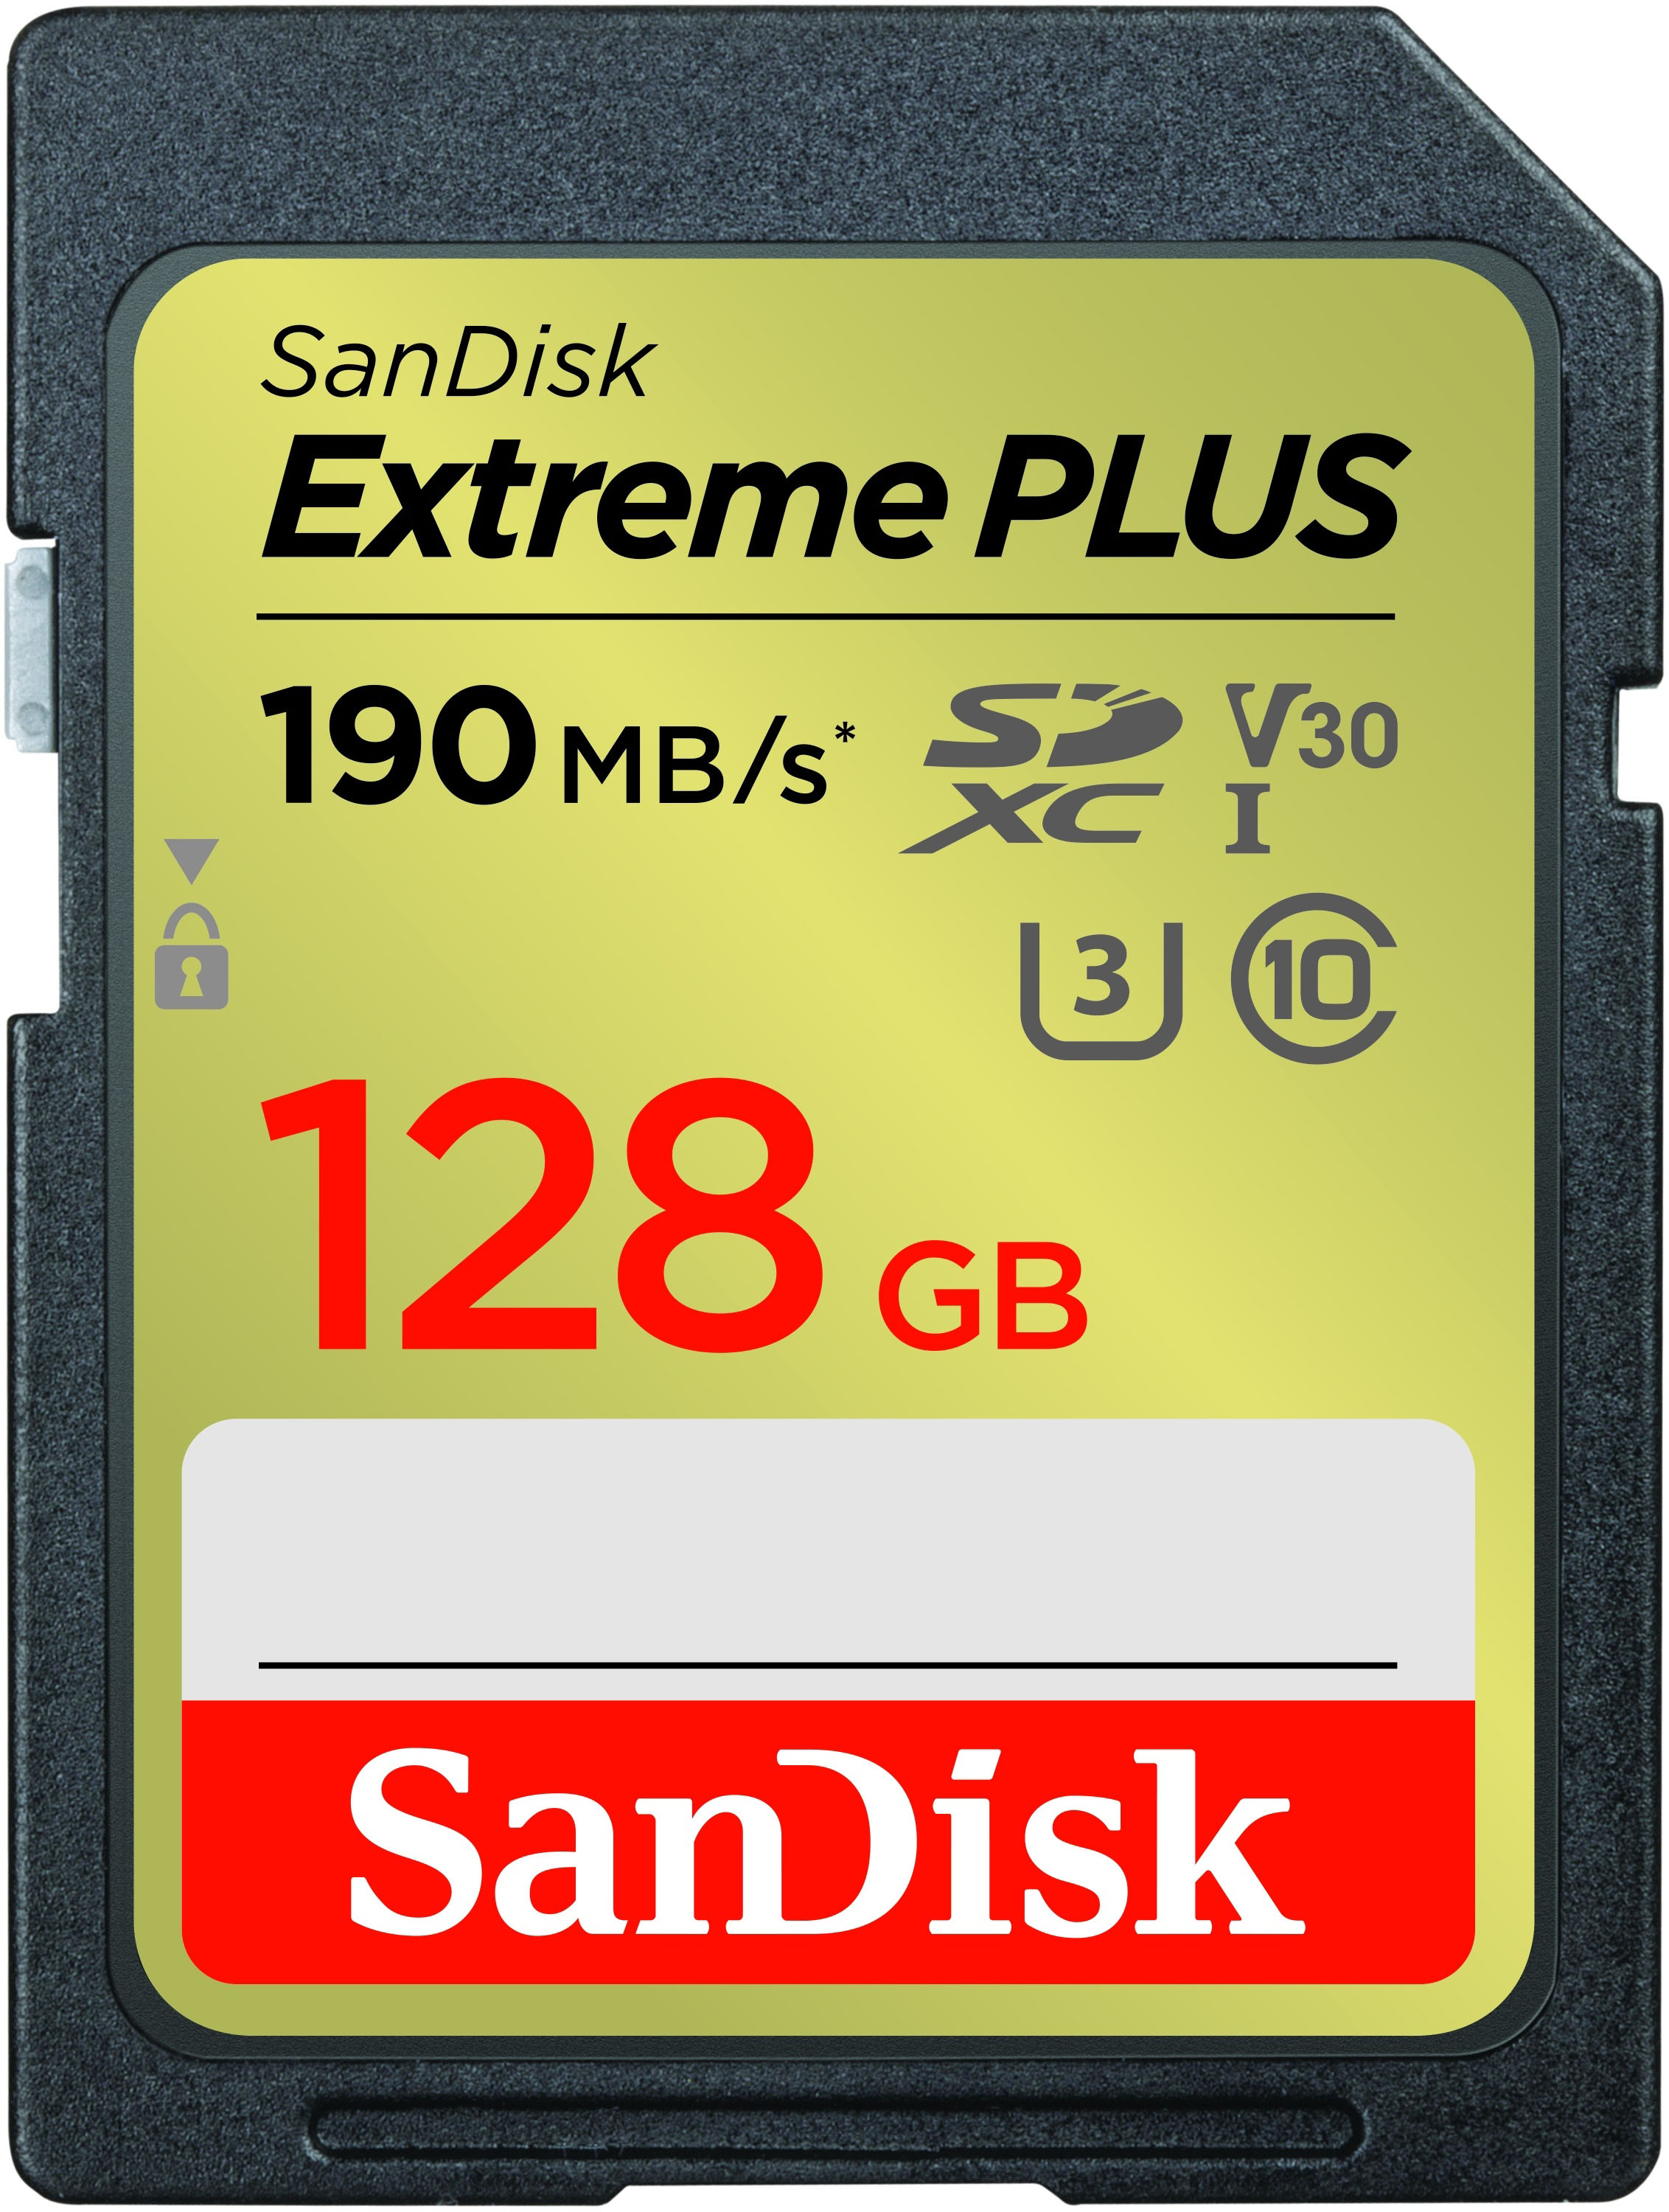 SanDisk Extreme PLUS 128GB SDXC UHS-I Memory Card SDSDXWA-128G-ANCIN - Best Buy $14.99